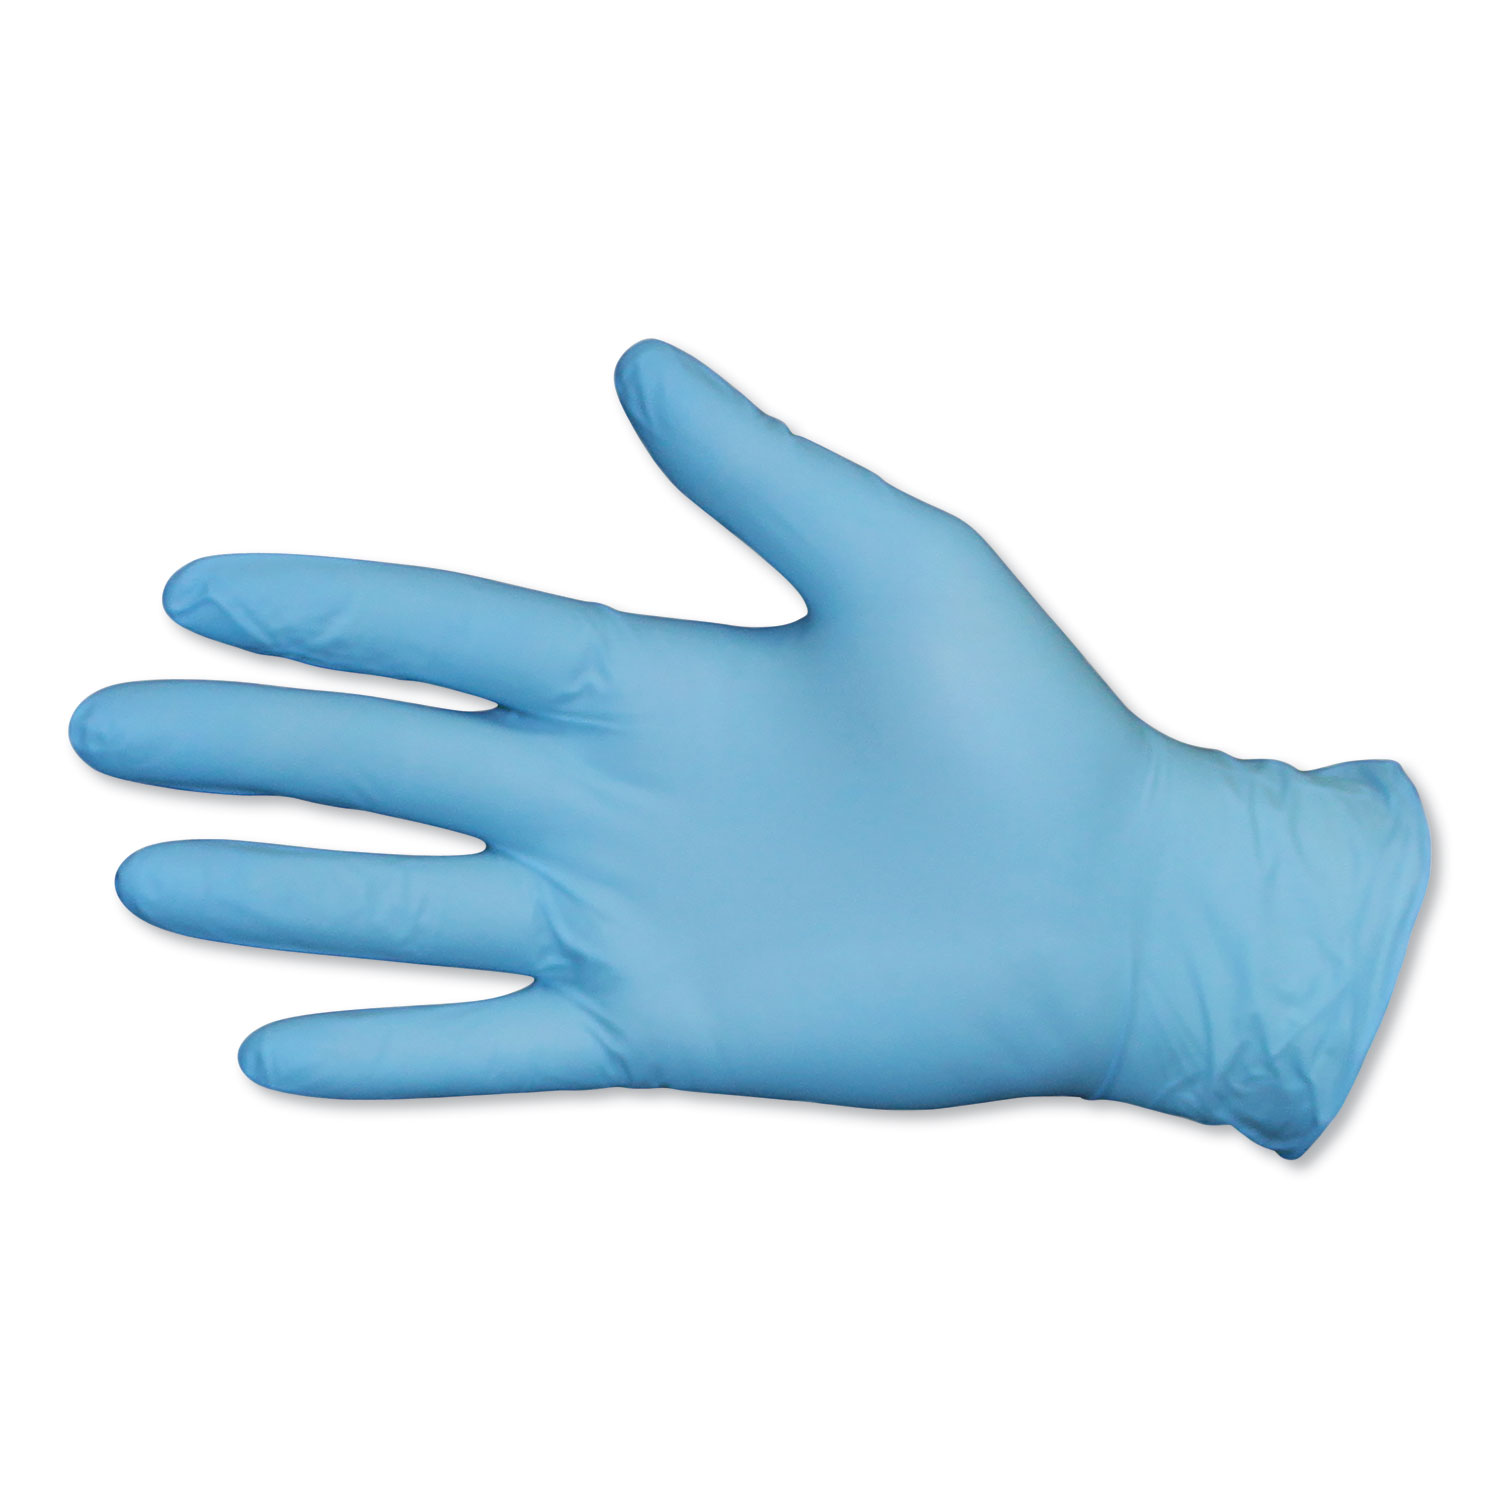  Impact 8644S Pro-Guard Disposable Powder-Free General-Purpose Nitrile Gloves, Blue, Small, 100/Box (IMP8644SBX) 